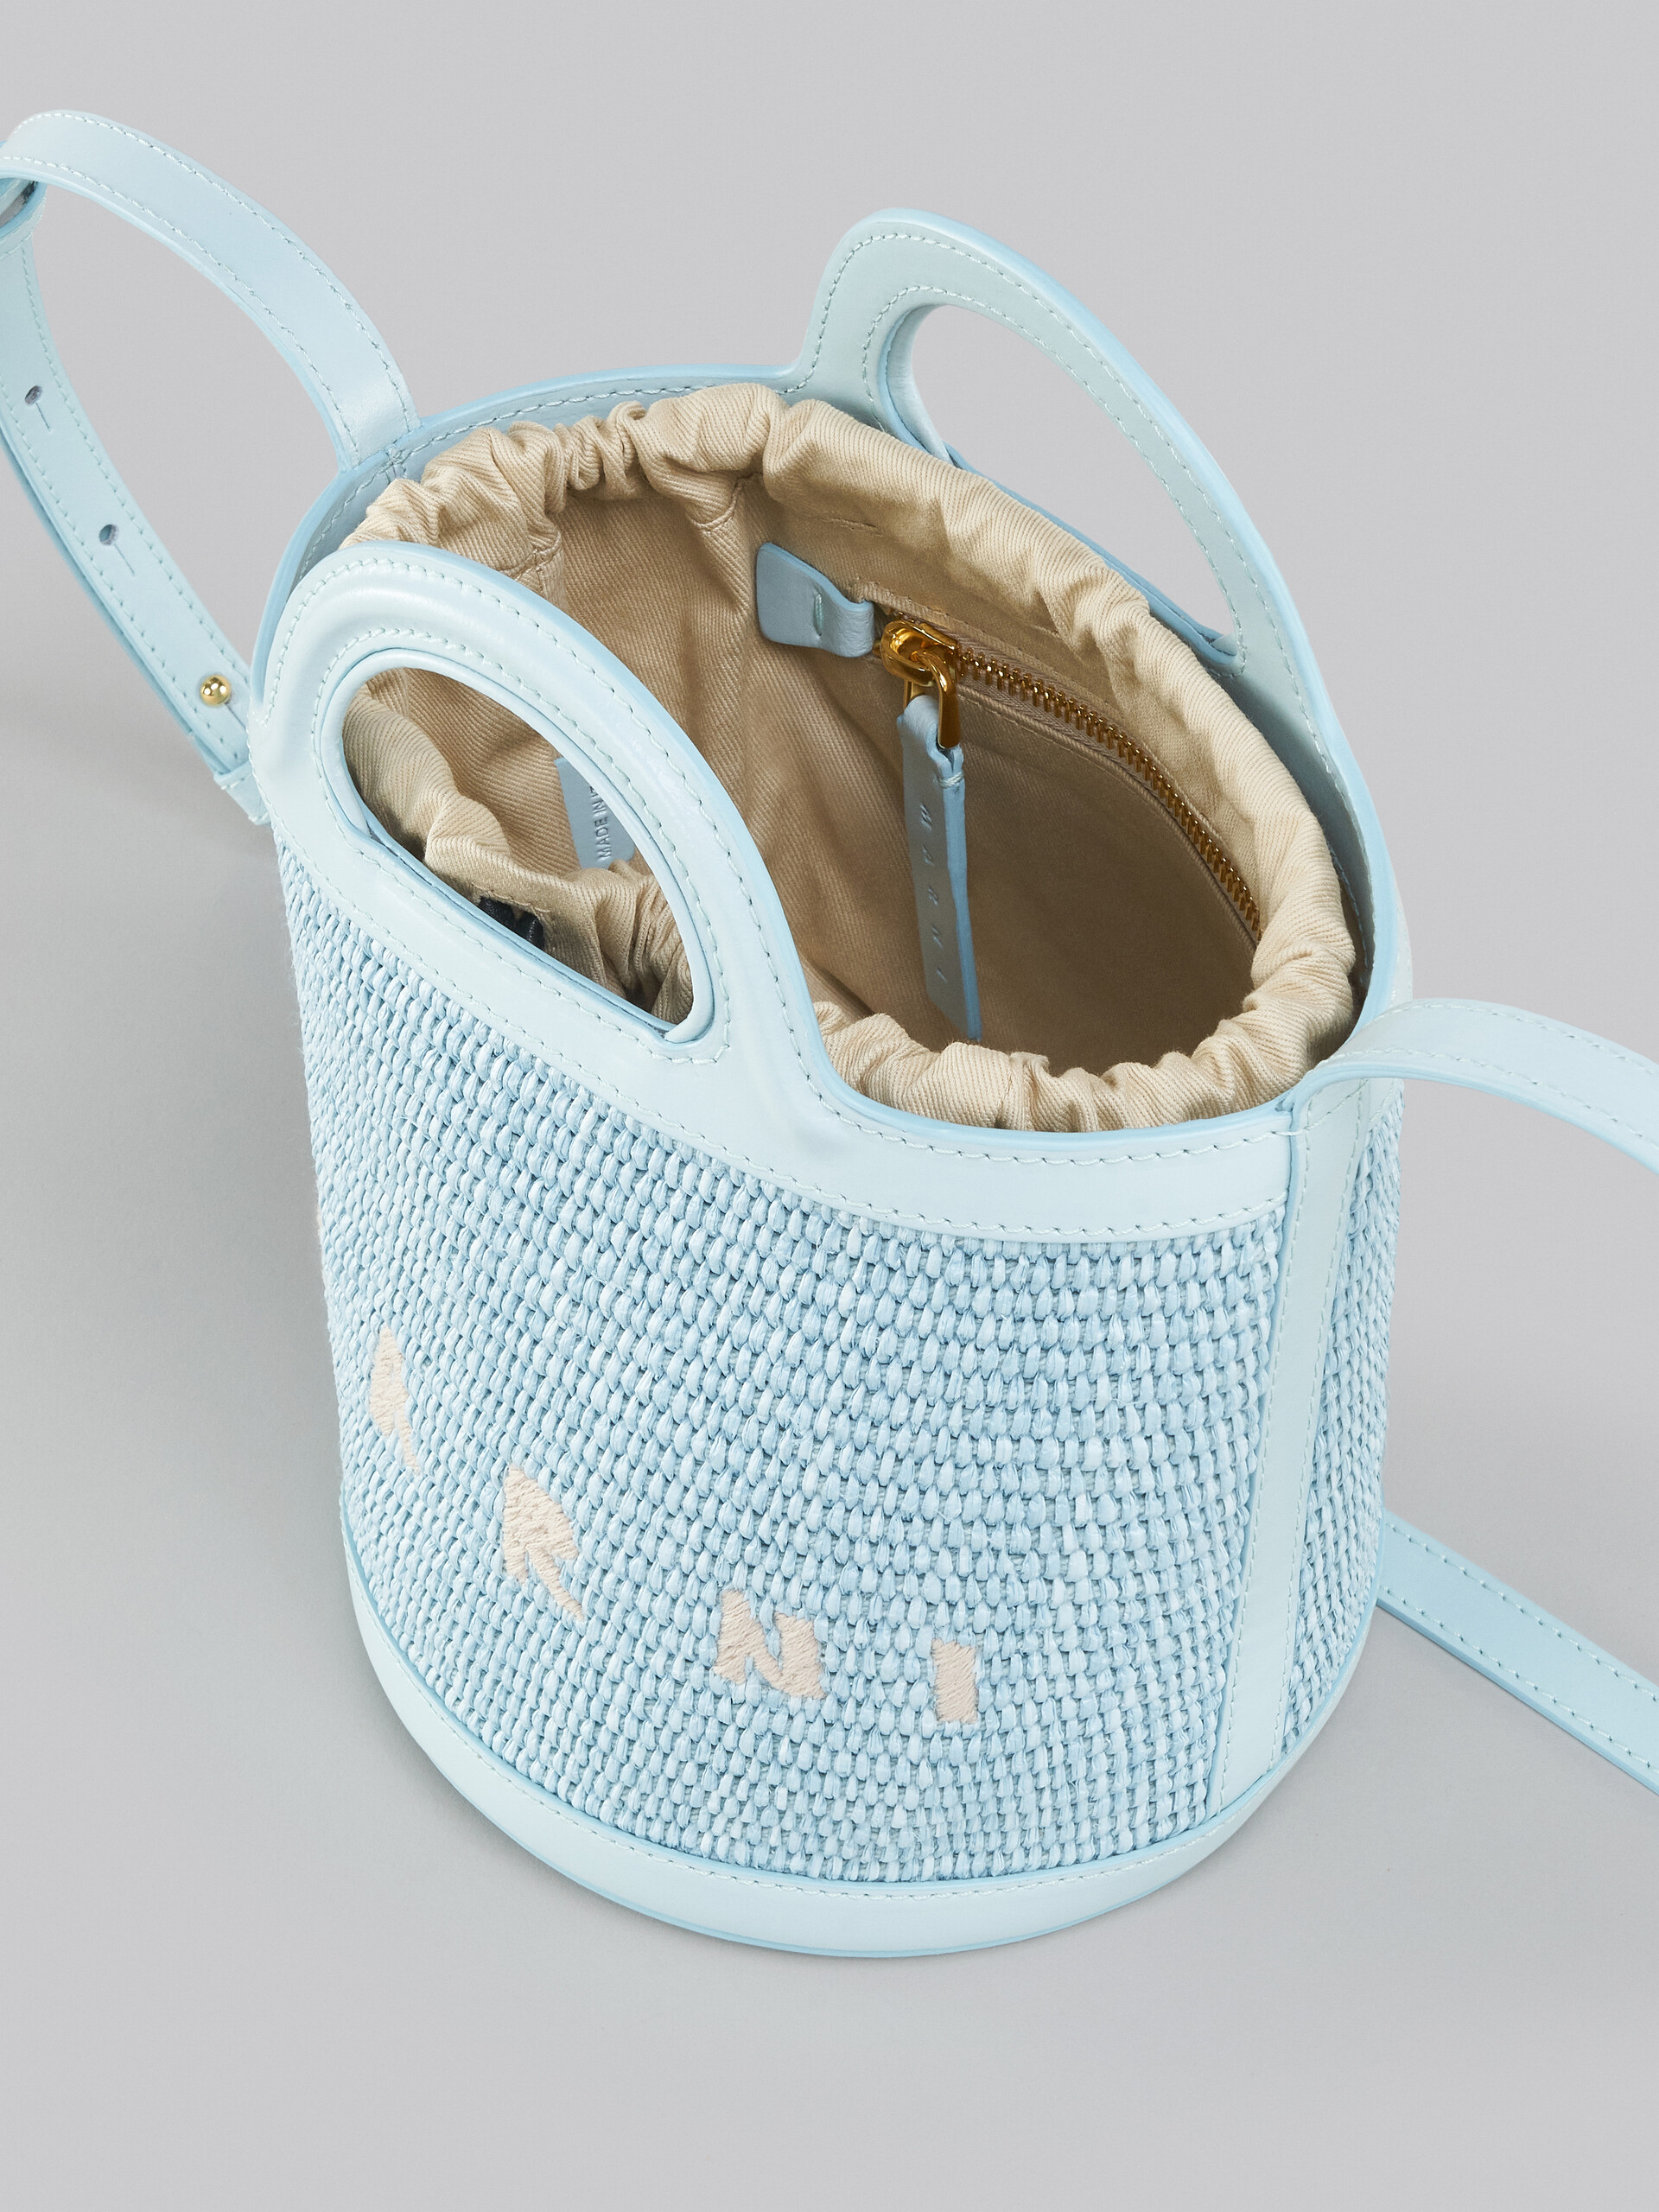 Tropicalia Small Bucket Bag in light blue leather and raffia - Shoulder Bag - Image 4